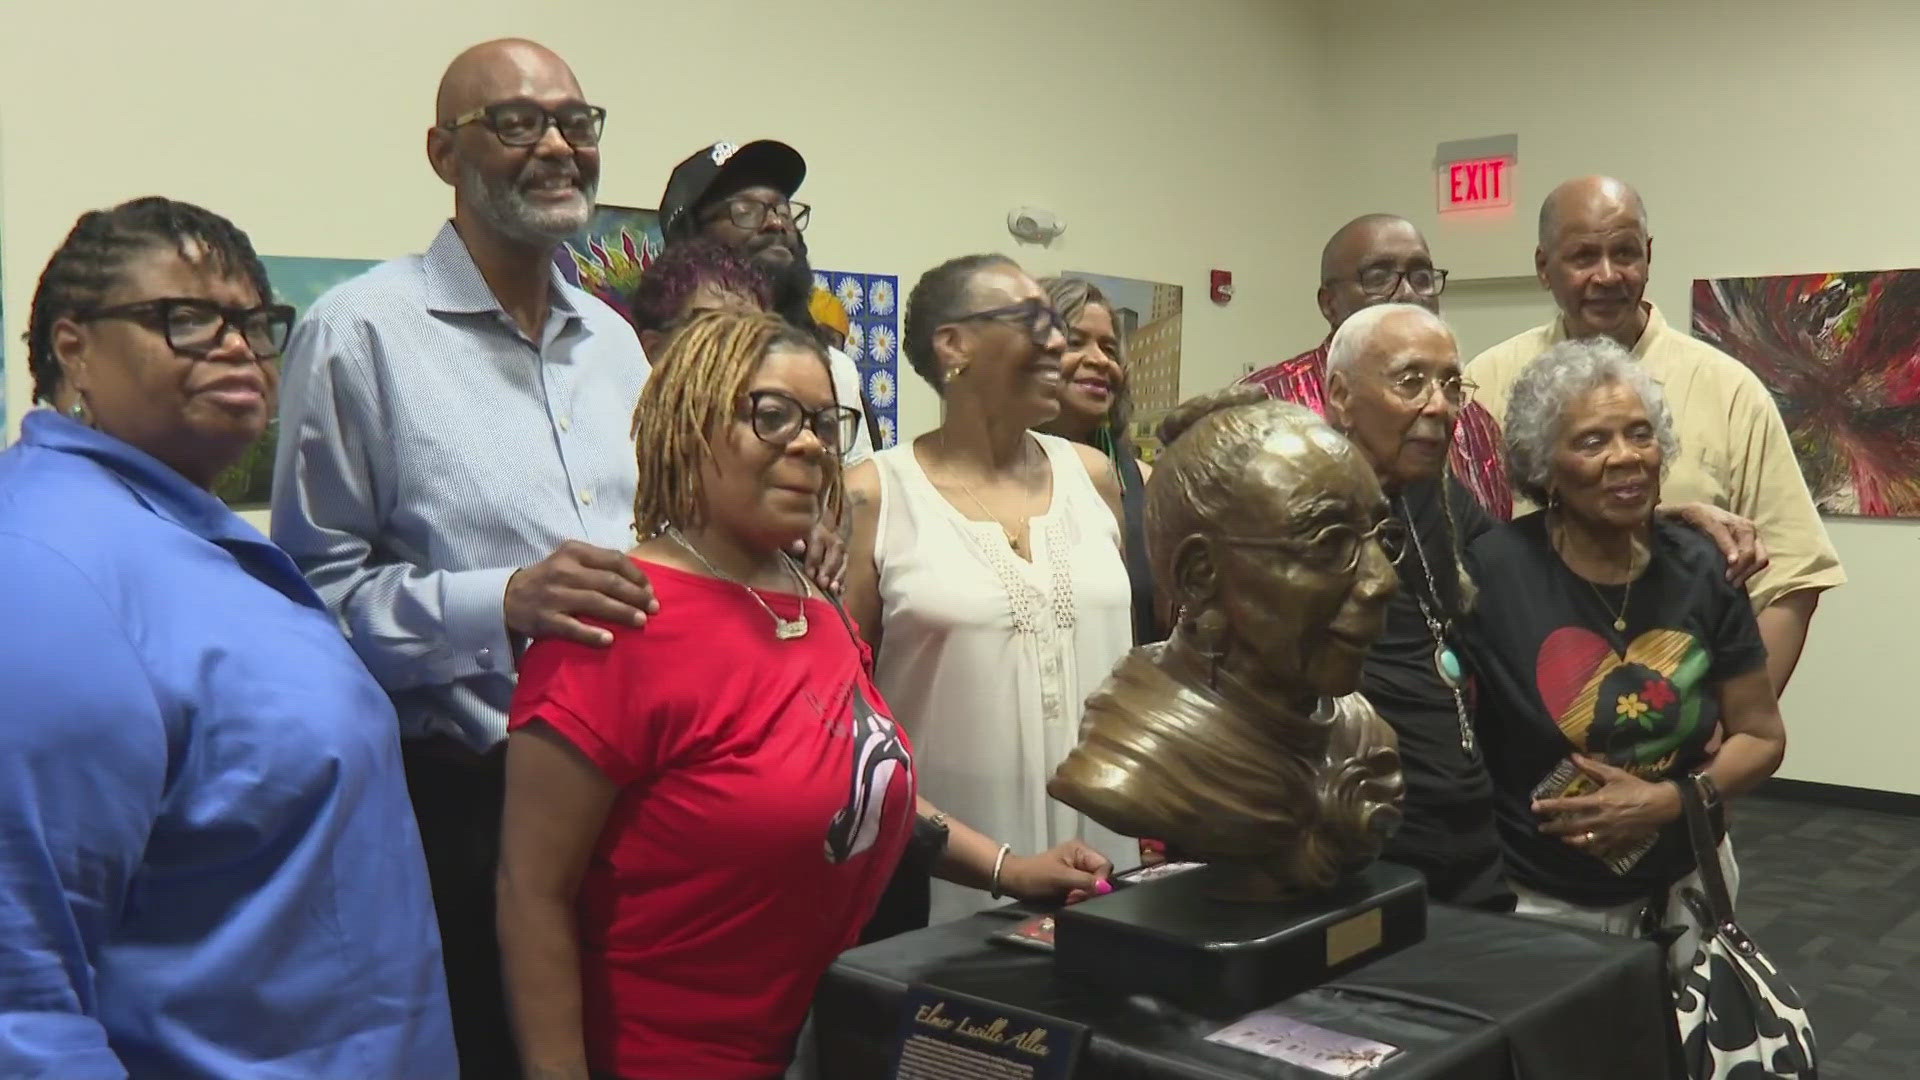 Seven people were honored, including Elmer Lucille Allen.